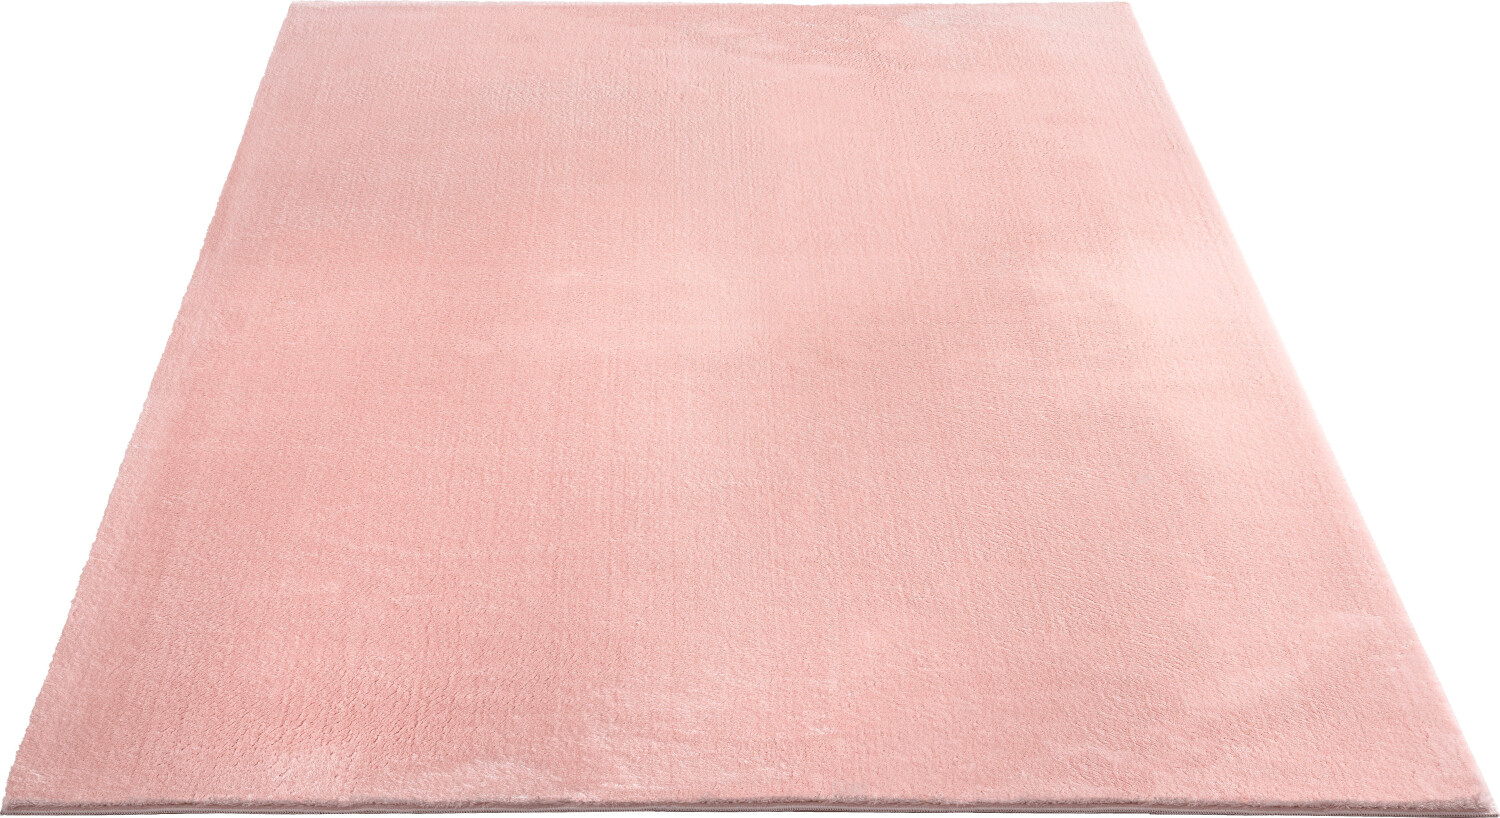 37 (98368440) ab Merinos rosa bei 230 € 1,9 Preisvergleich 160 x 45,99 cm Loft | x